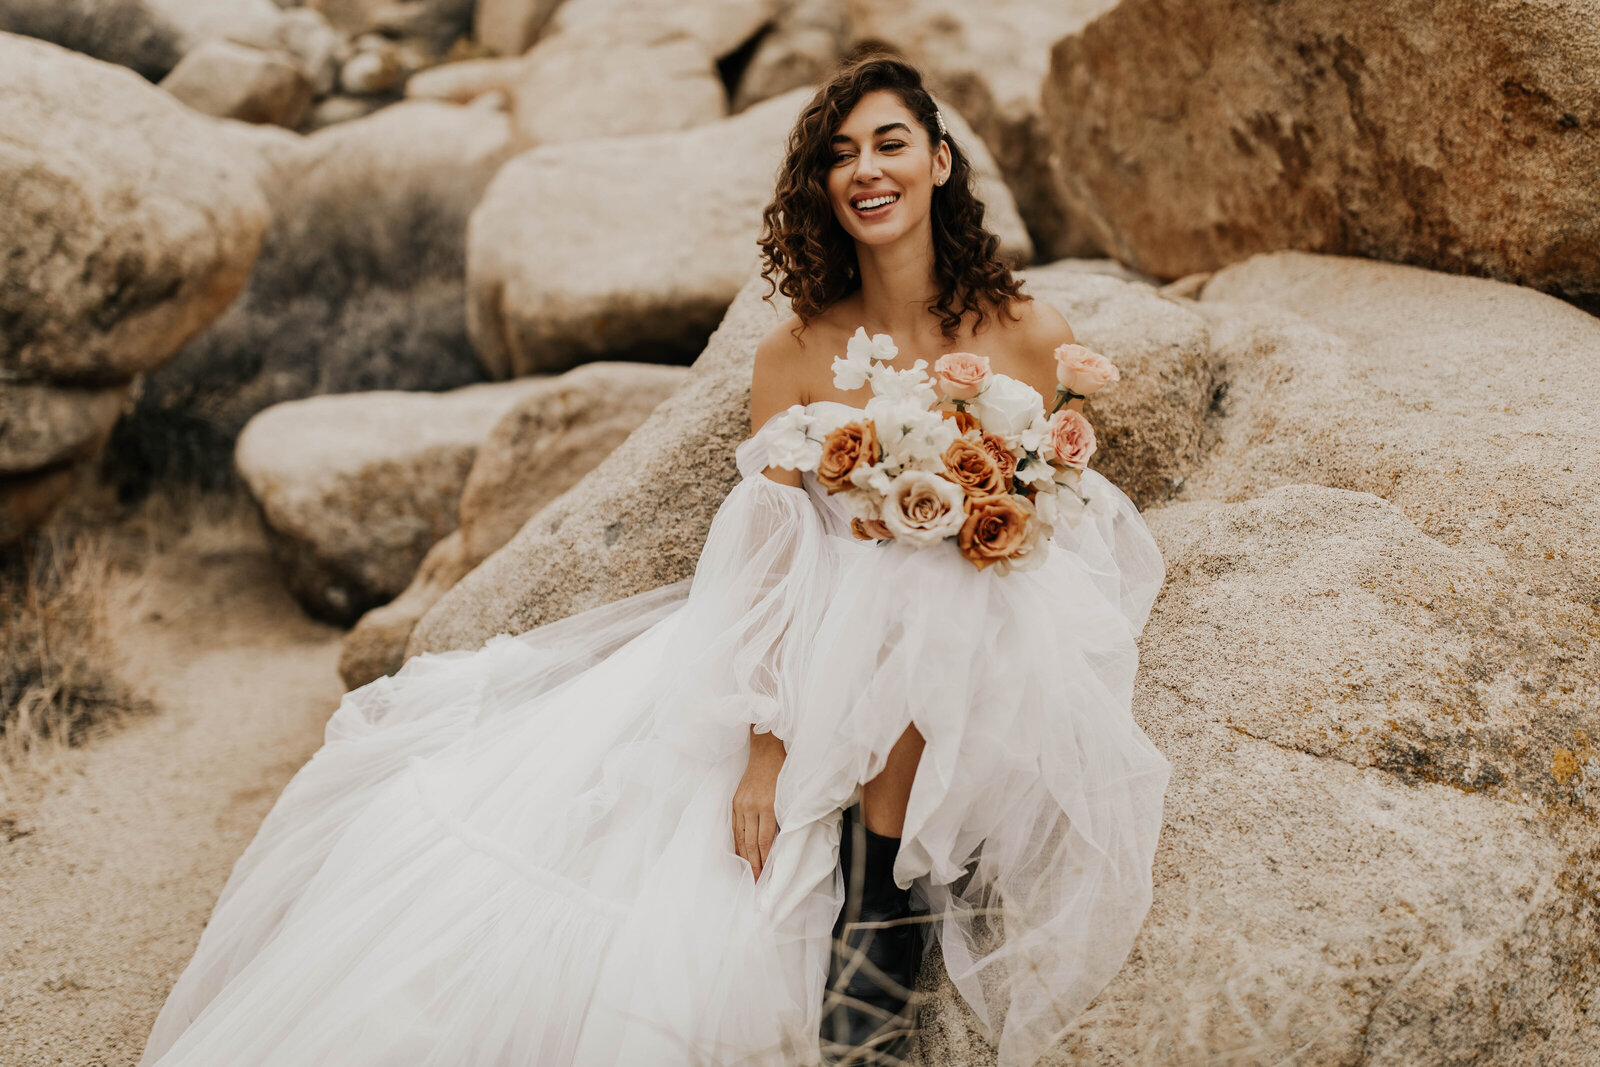 Bride holding bouquet smiling sitting on desert boulders